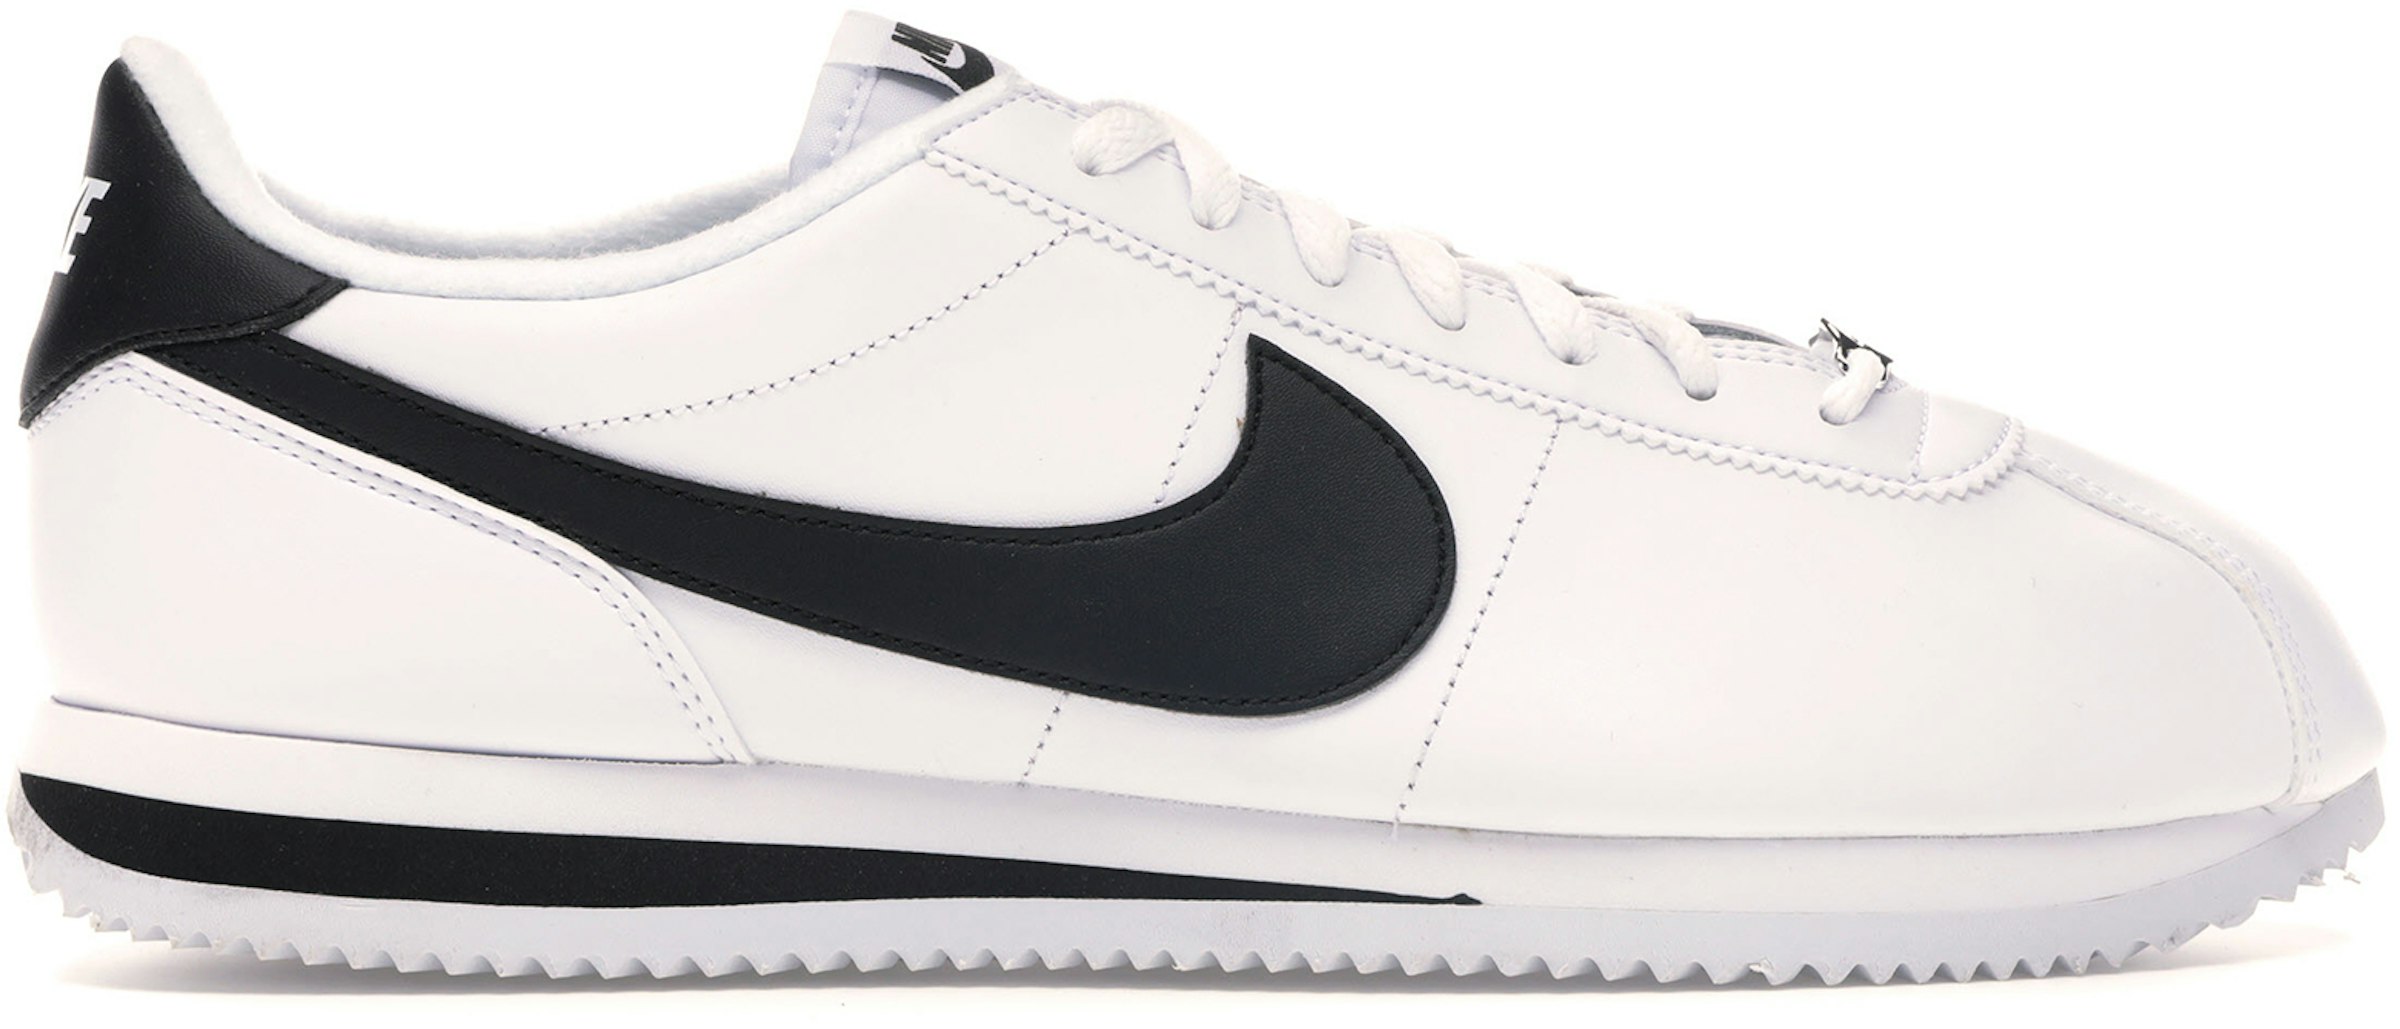 Nike Cortez Basic Leather White Black (2017) Hombre 819719-100 -